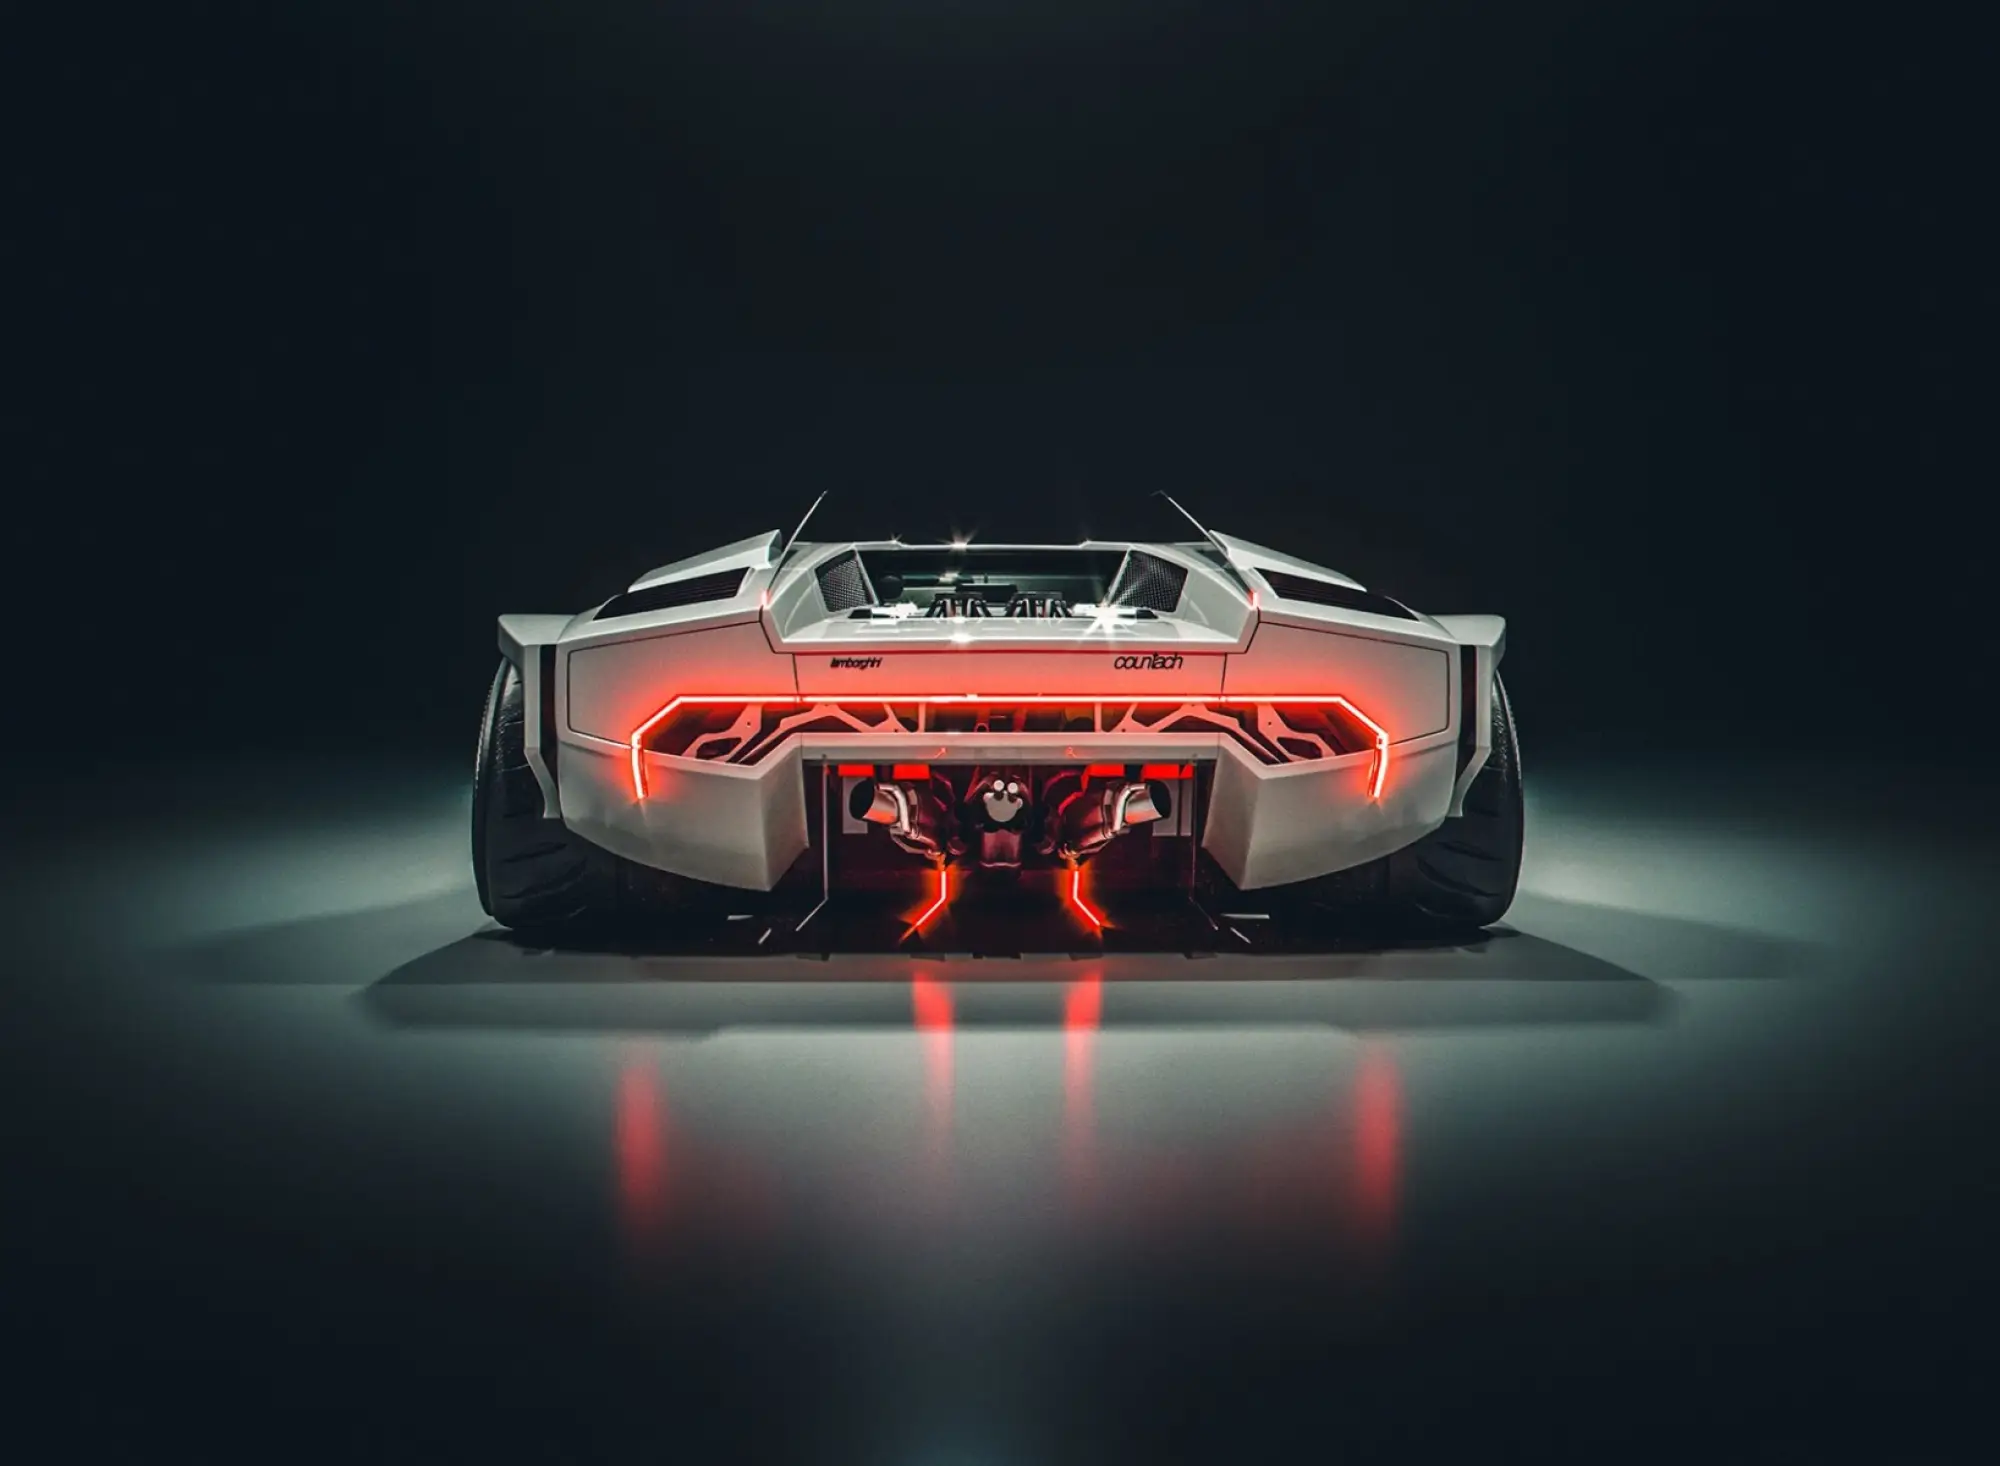 Lamborghini Countach moderna 2020 - Rendering - 5